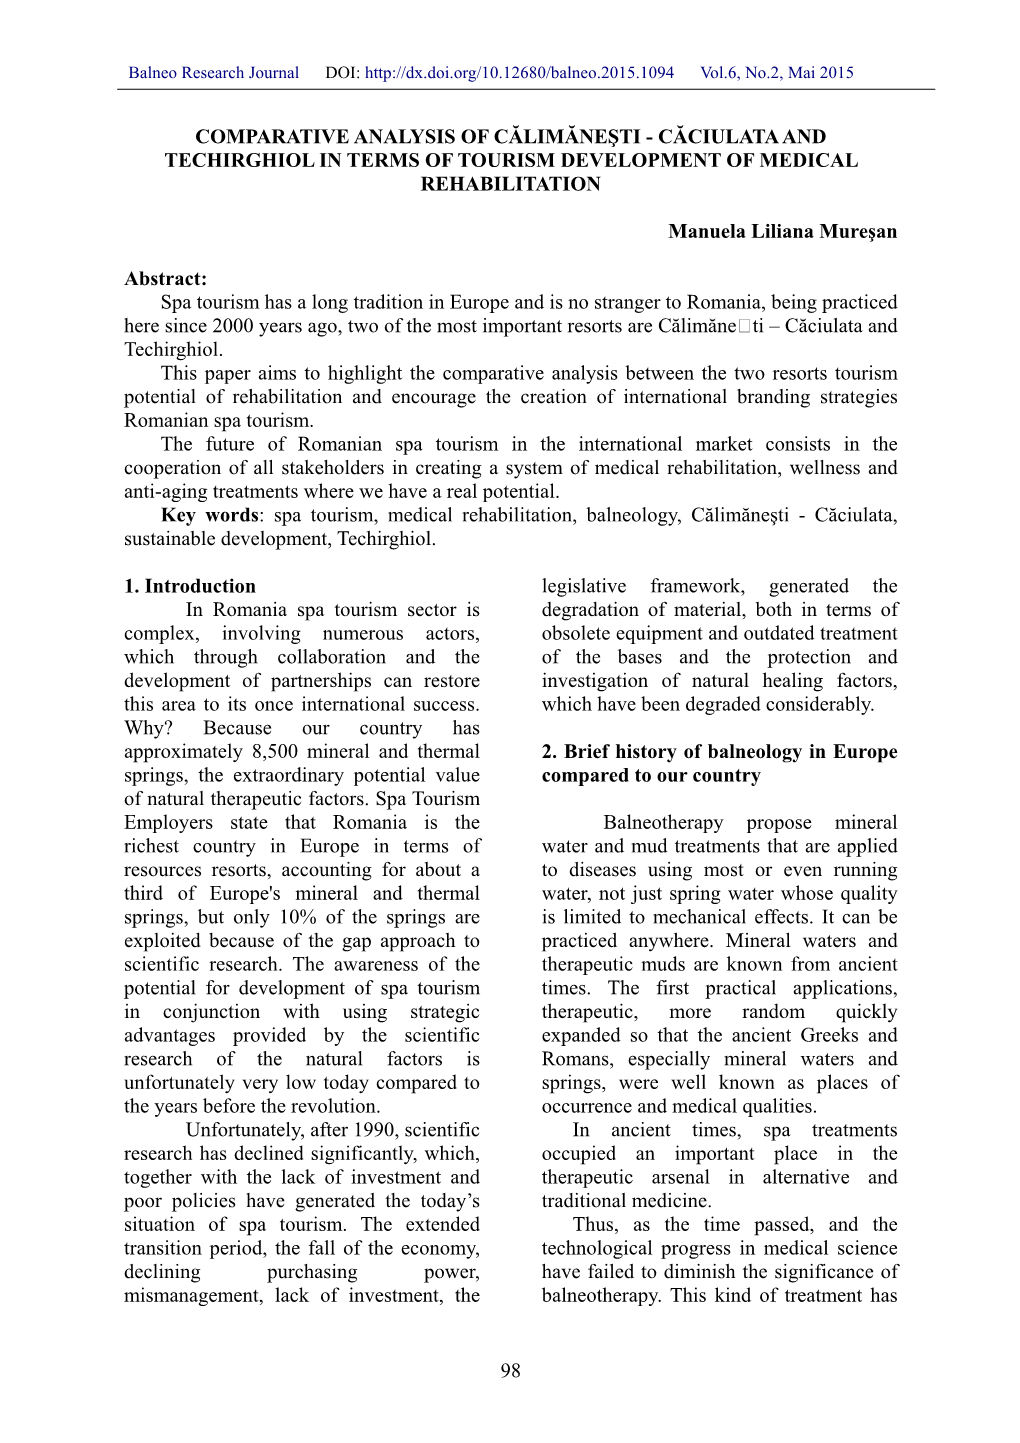 Comparative Analysis of Călimăneşti - Căciulata and Techirghiol in Terms of Tourism Development of Medical Rehabilitation